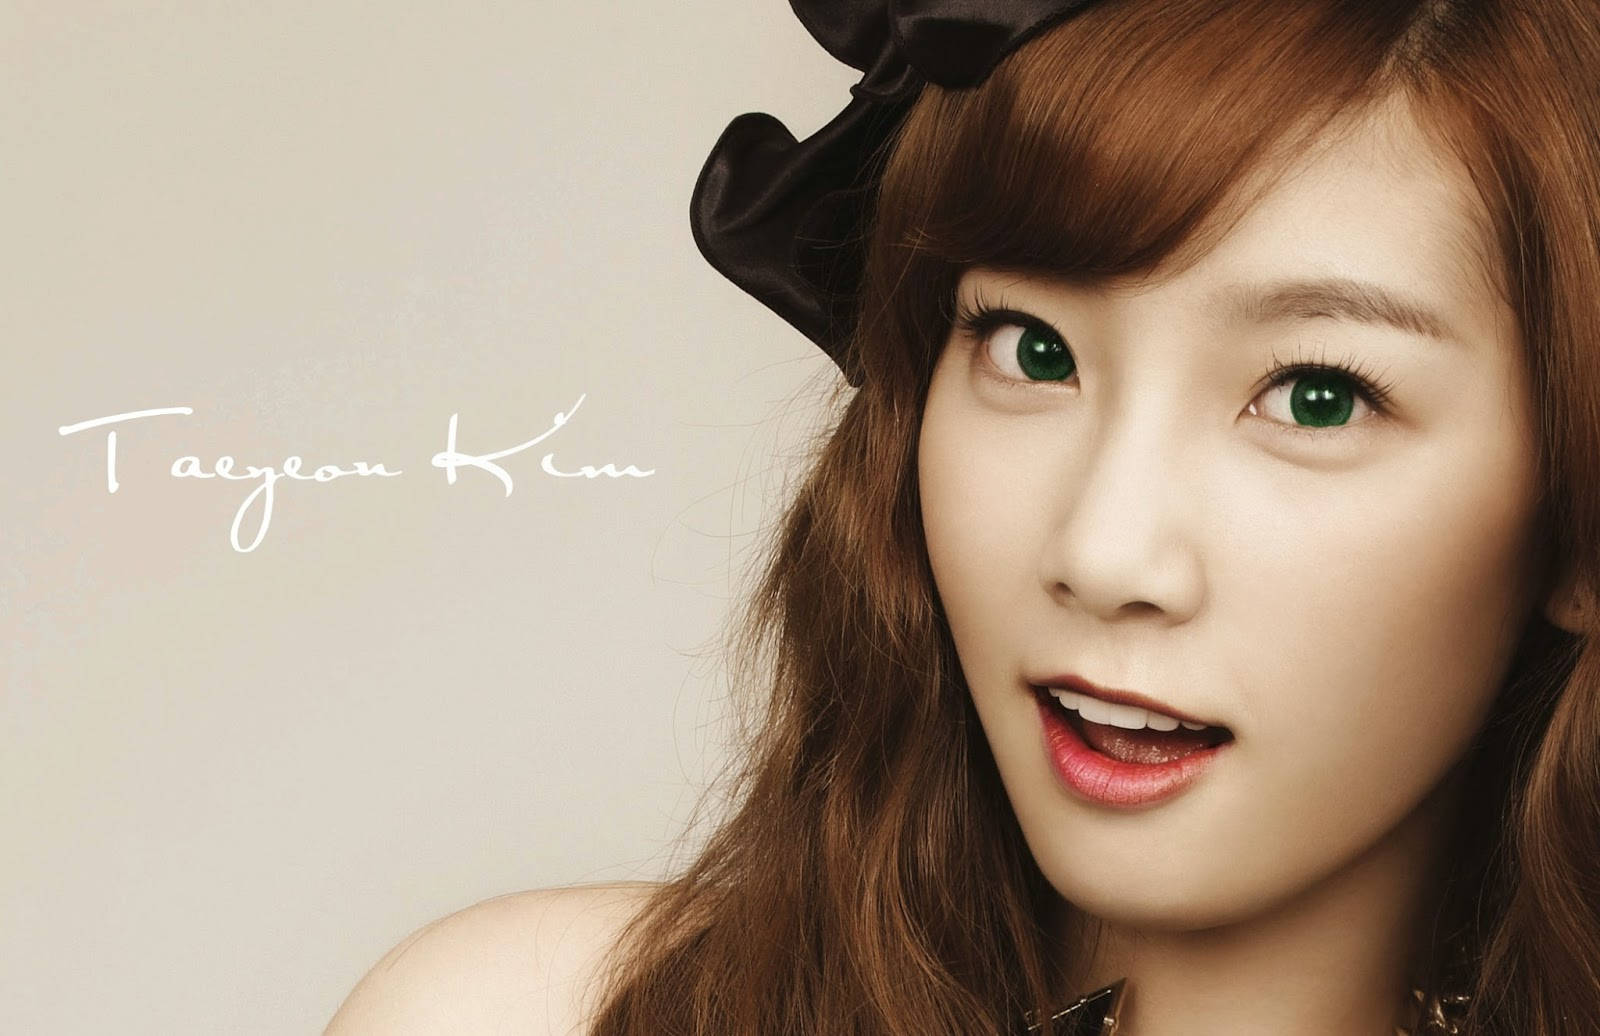 Kpop Idolen Kim Taeyeon. Wallpaper